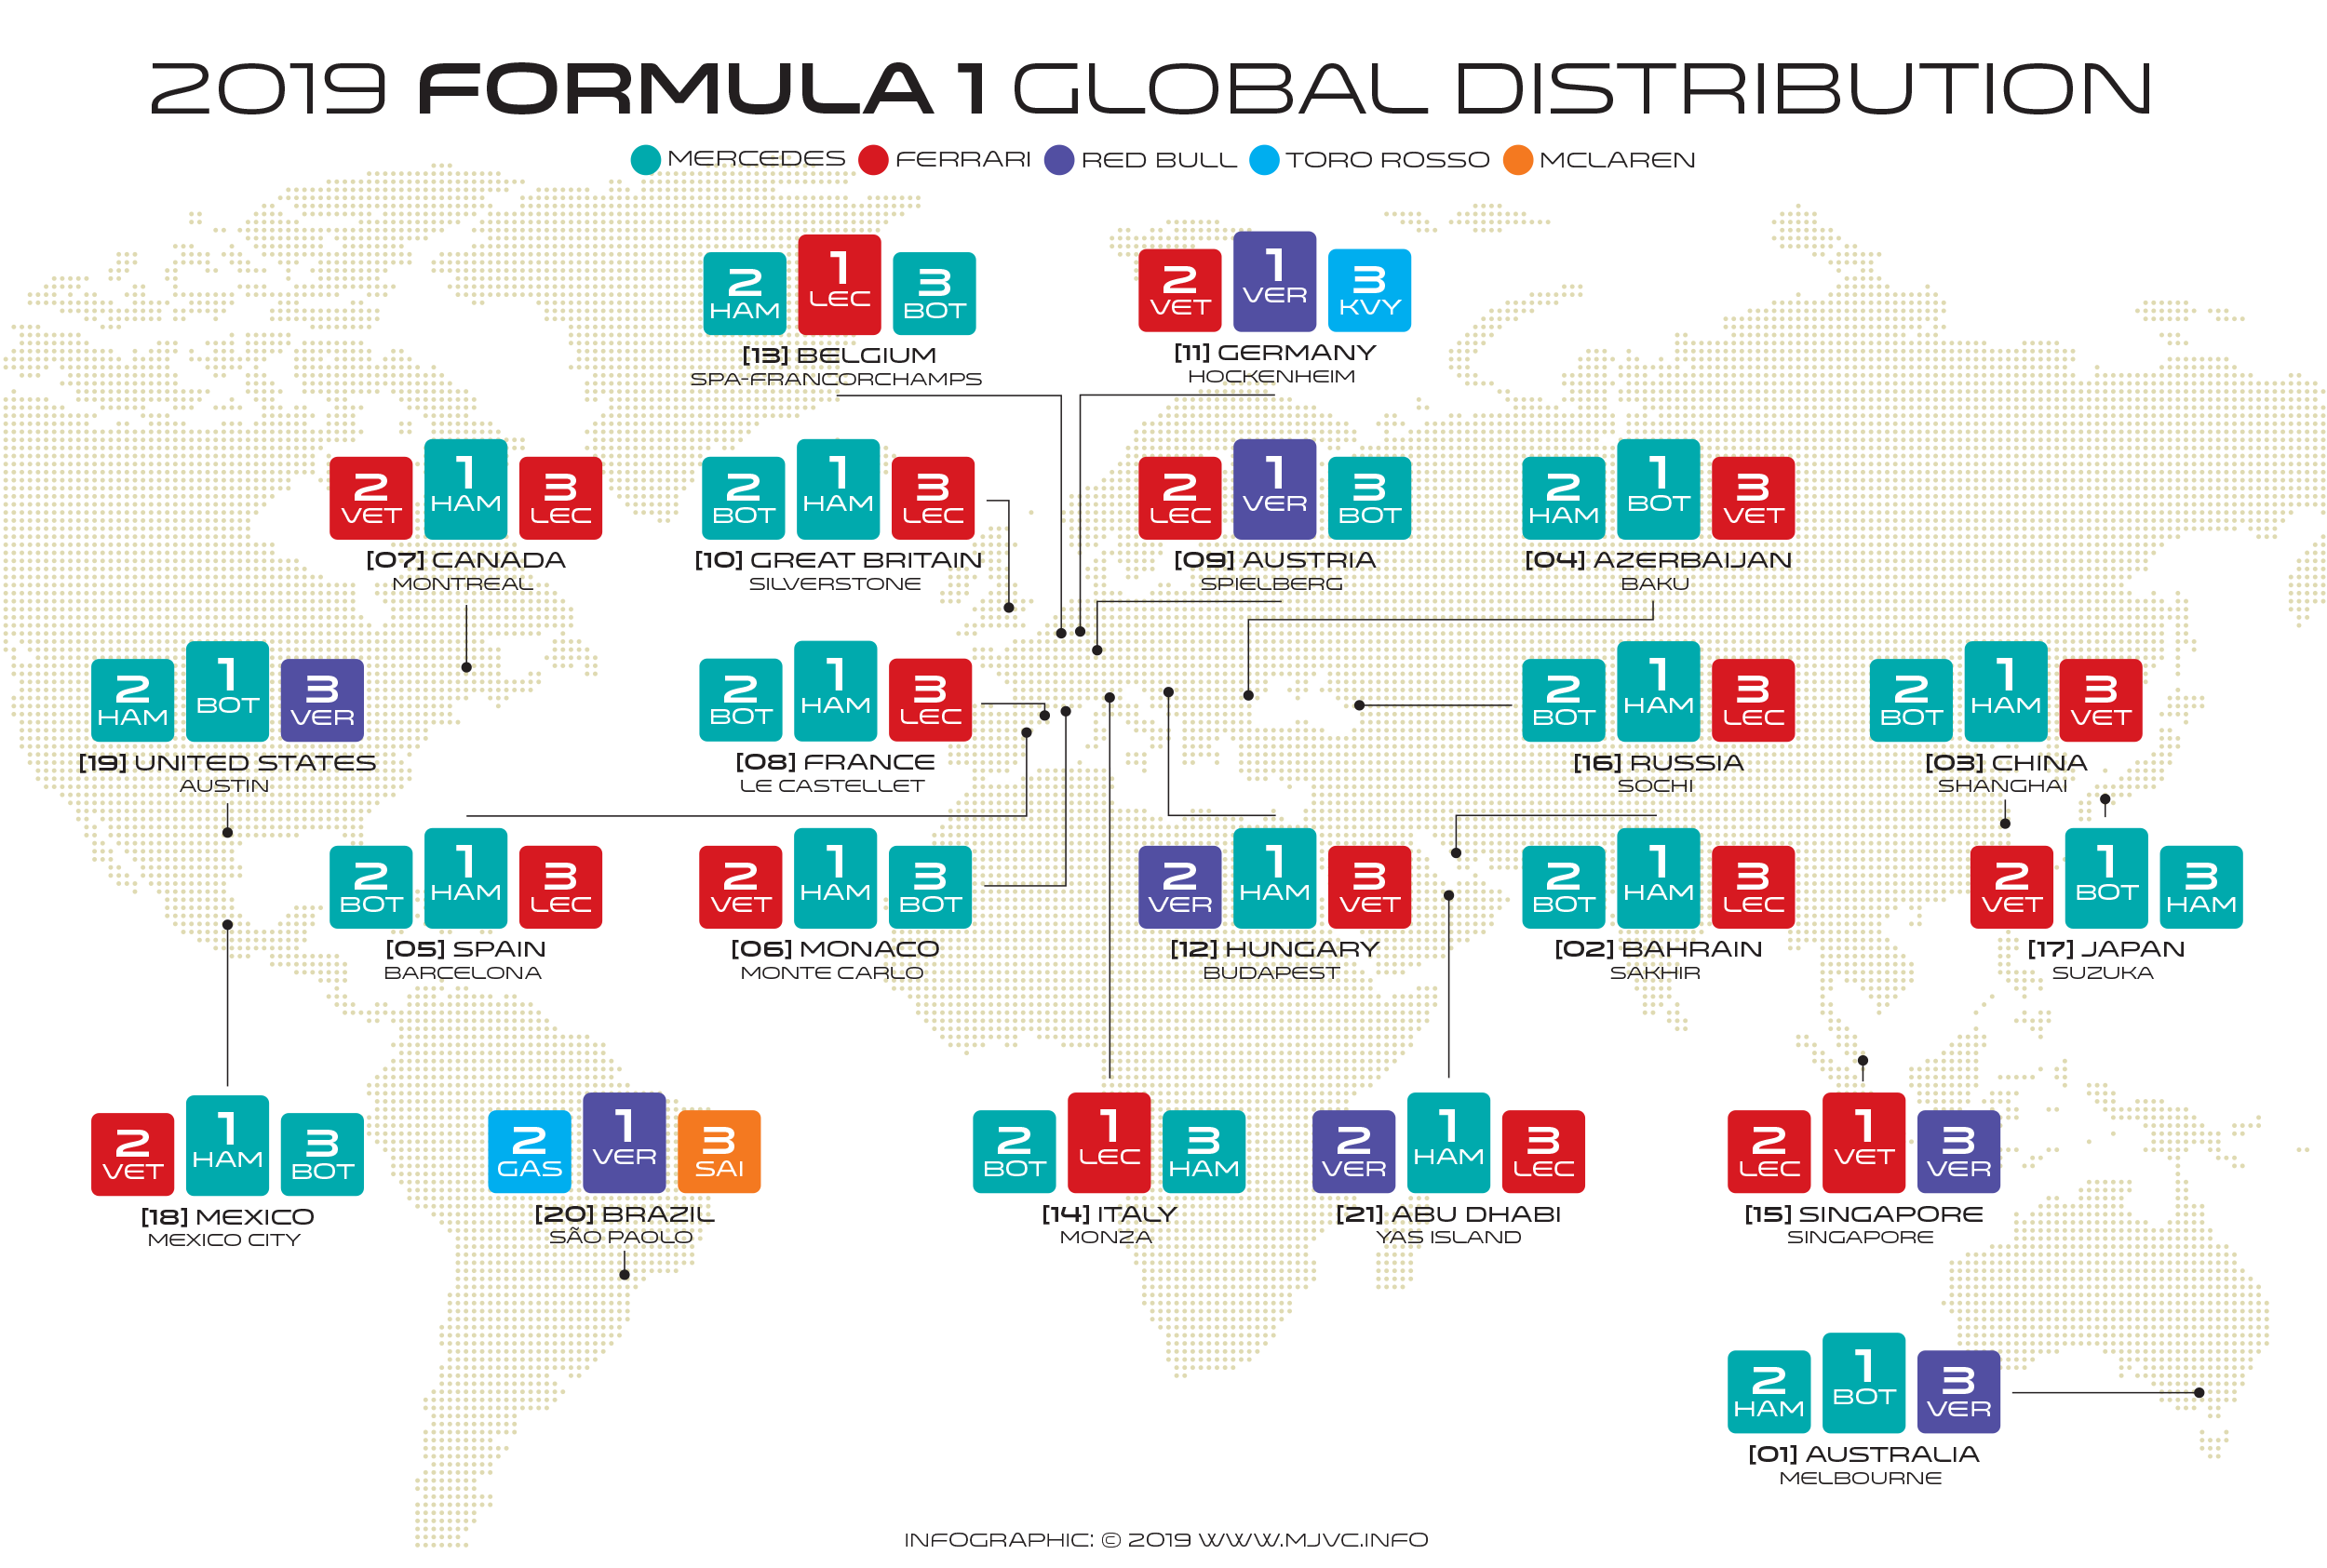 F1 2019 world distribution